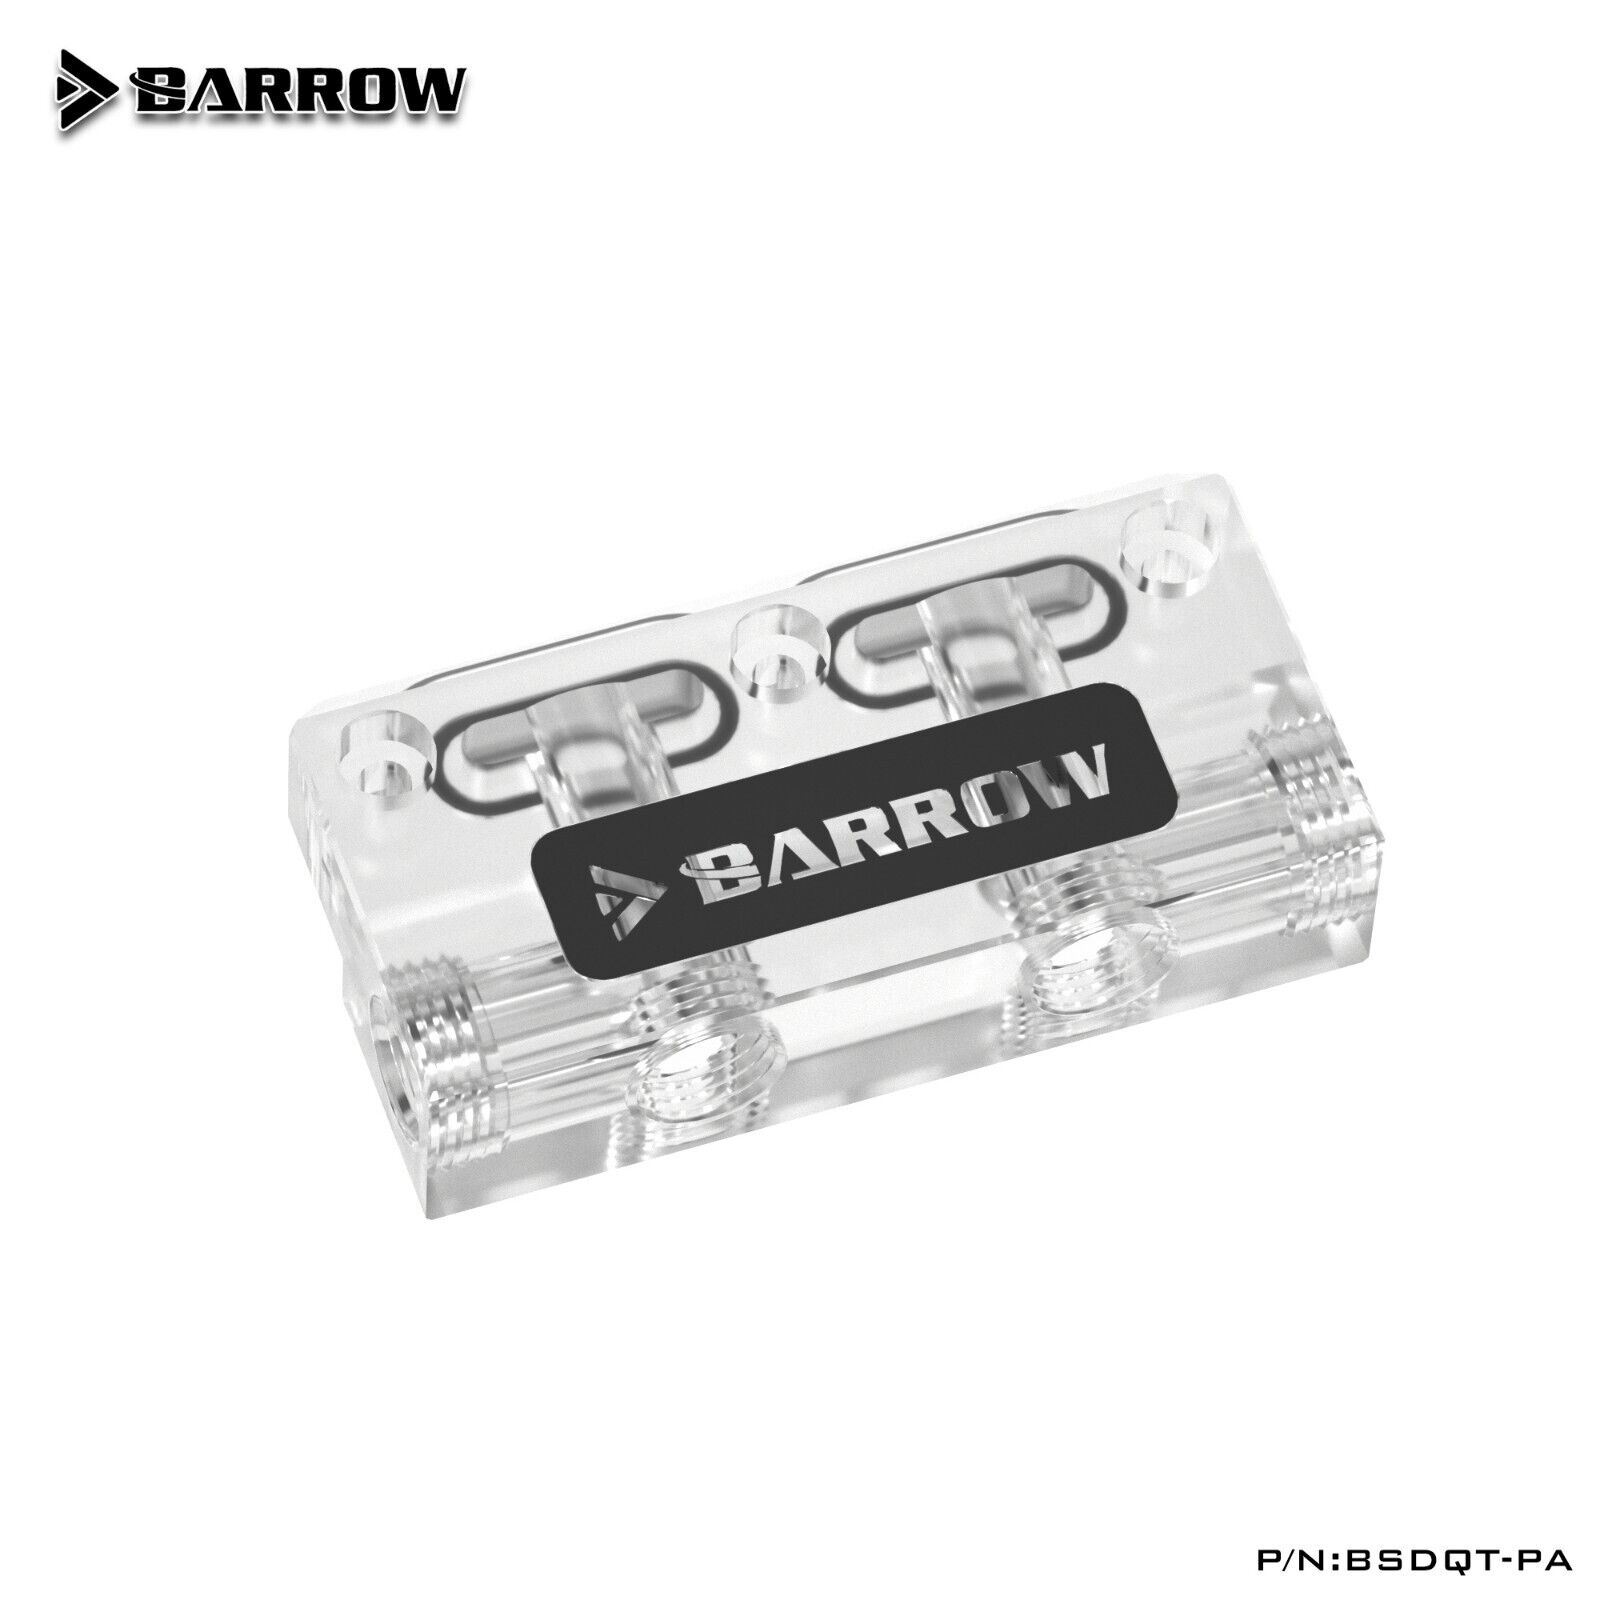 Barrow Acrylic Change Direction L Type GPU Block Bridge for GPU Water Block 